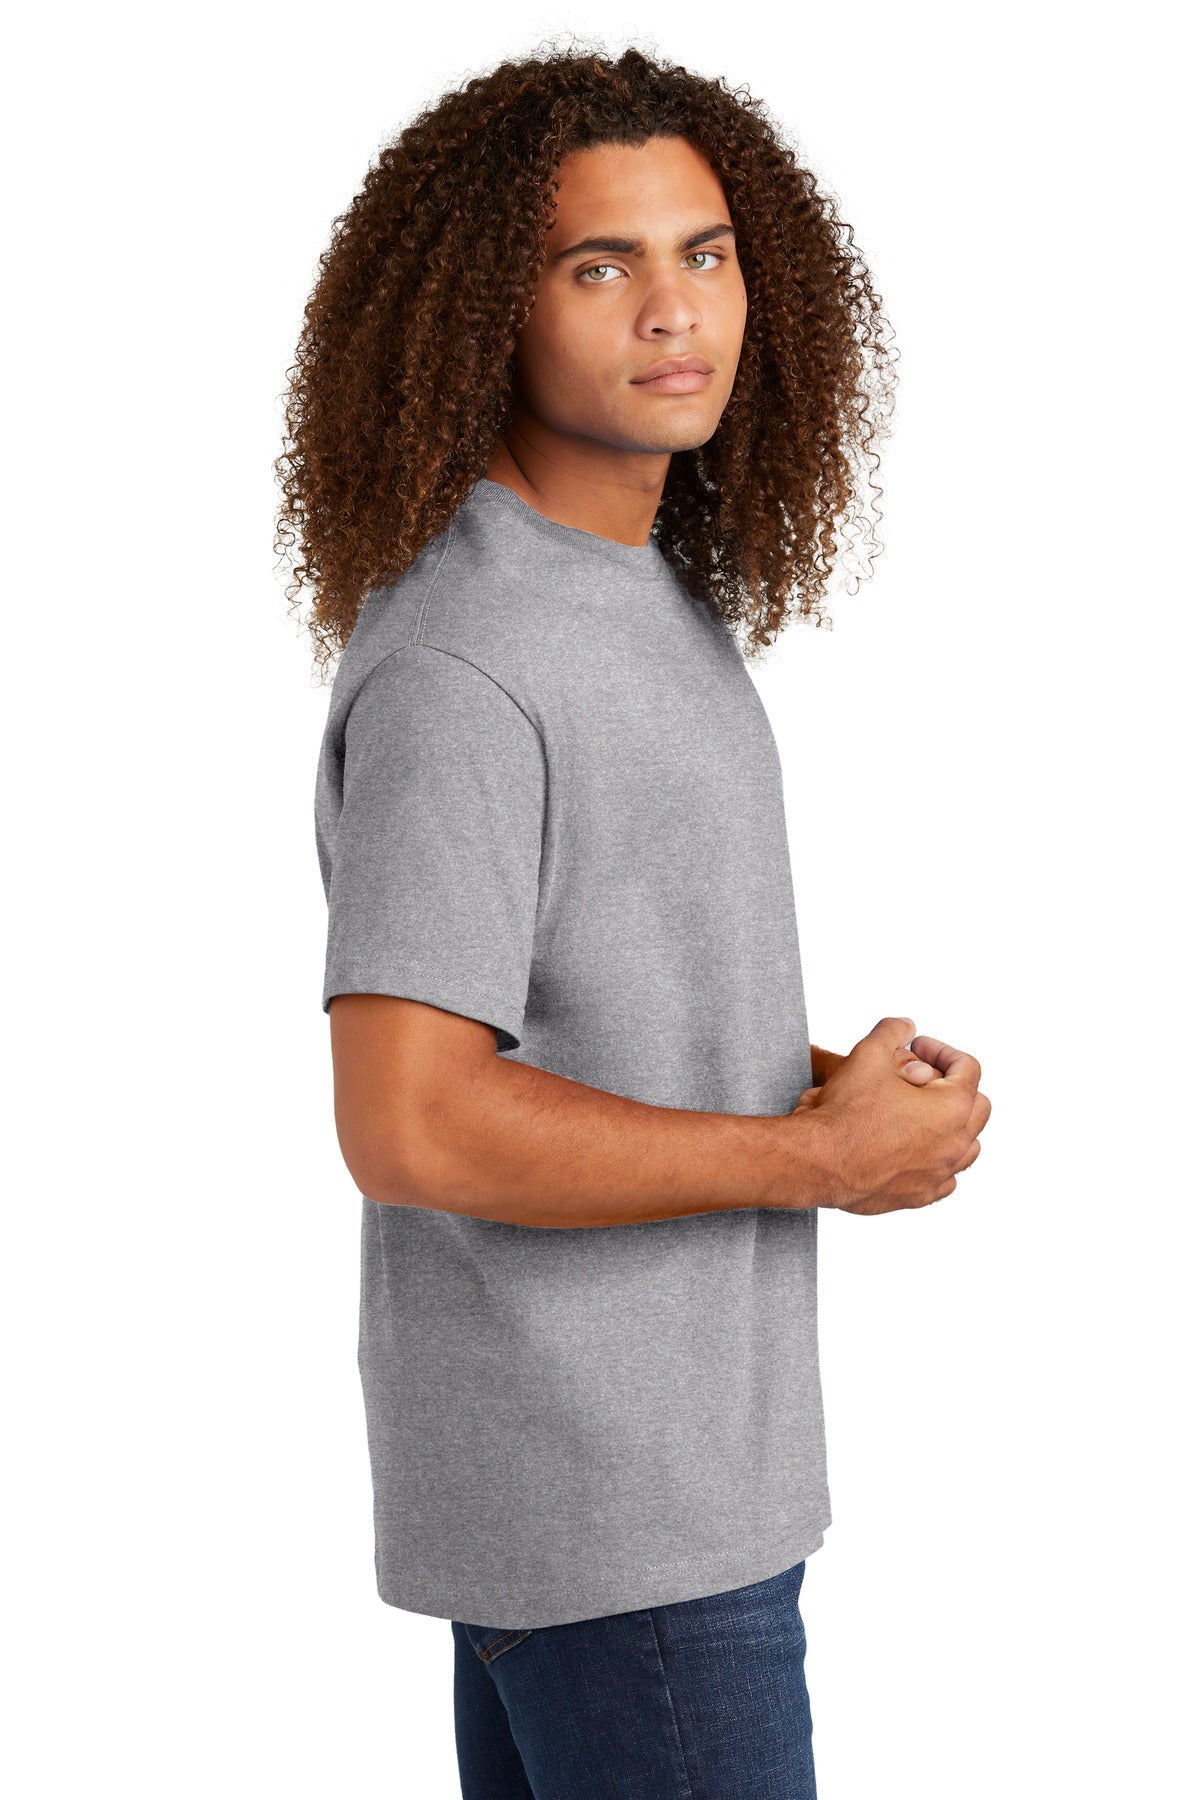 American Apparel® Relaxed T-Shirt 1301W [Heather Grey] - DFW Impression